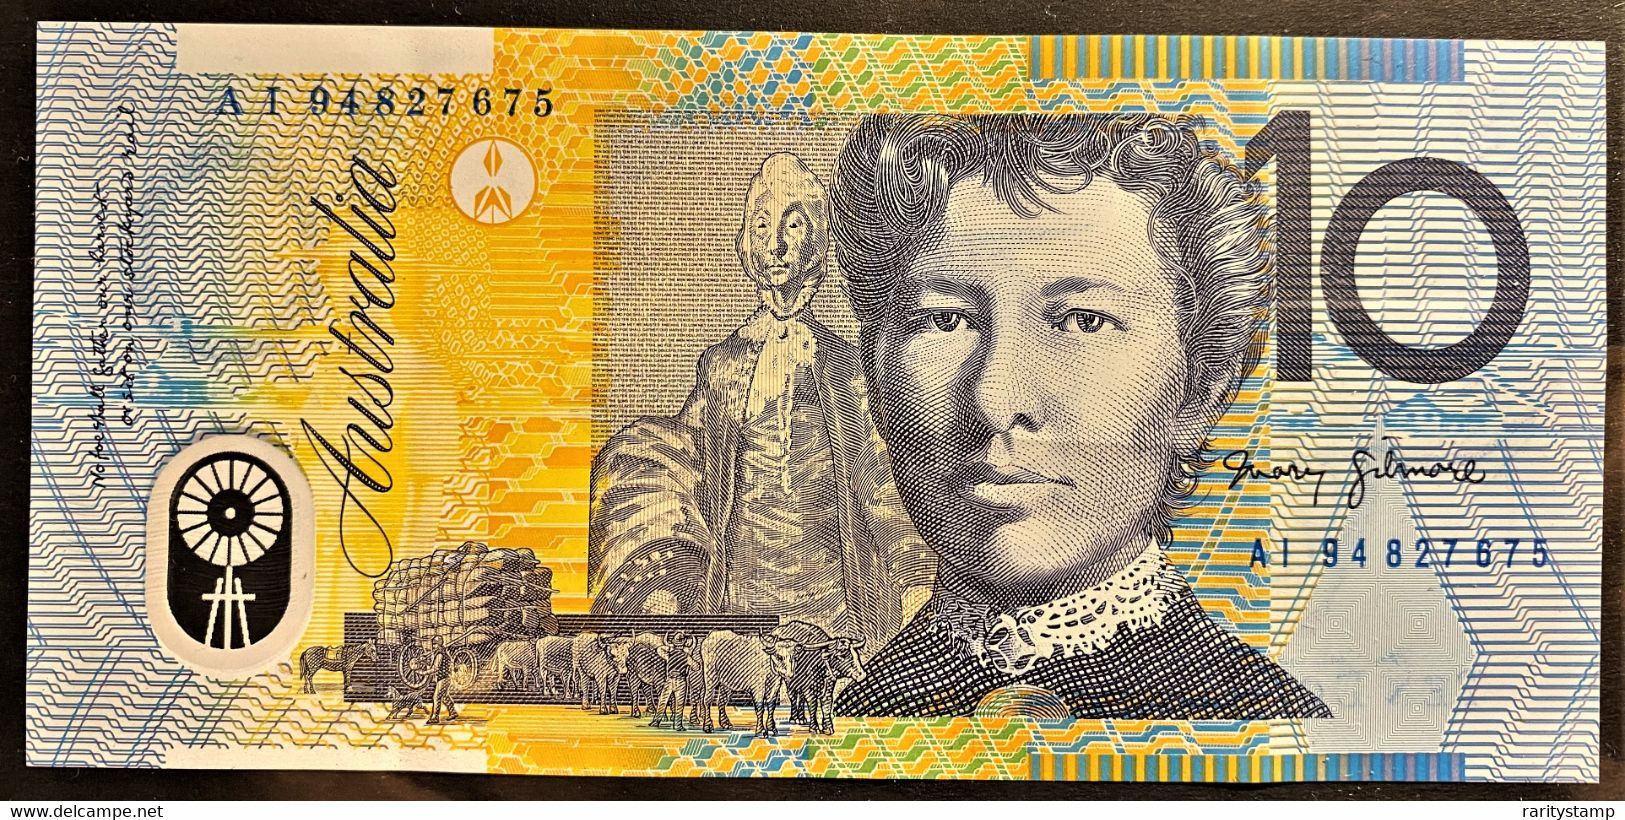 AUSTRALIA 1996  10 $ POLYMER QFDS - Lokale Munt